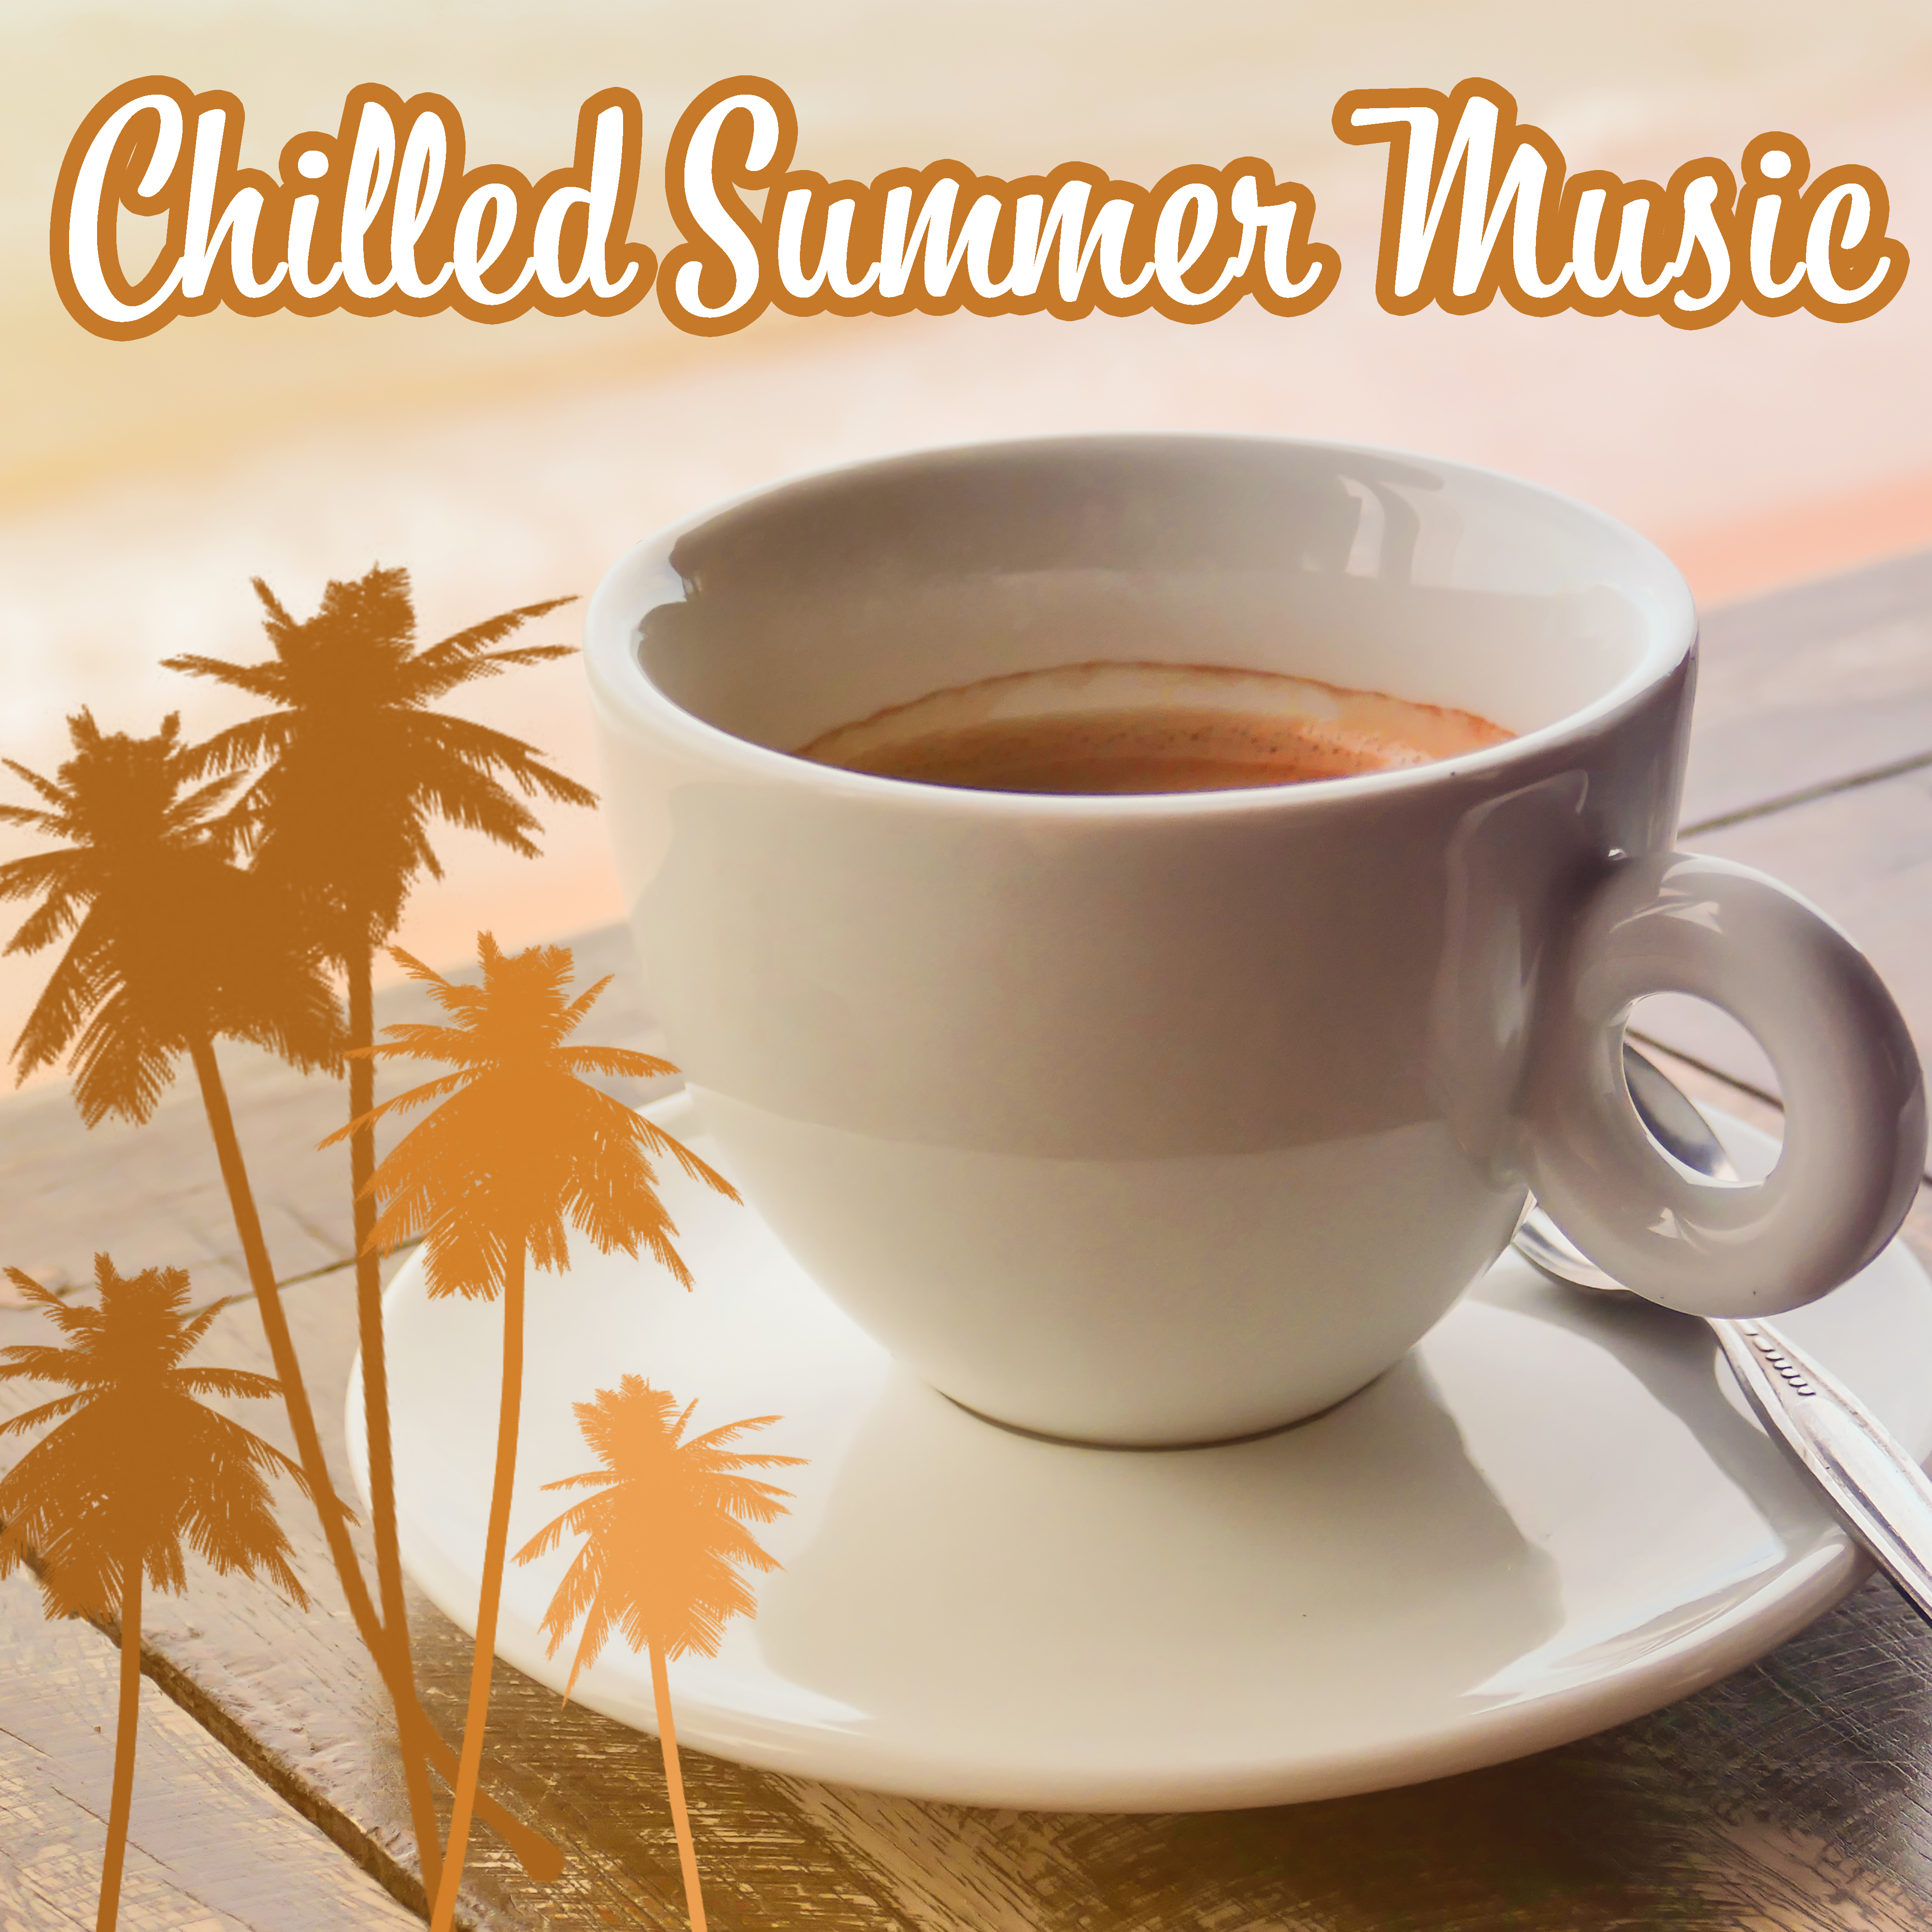 Chilled Summer Music – Easy Listening, Stress Relief, Beach Summer Music, Calming & Peaceful Sounds